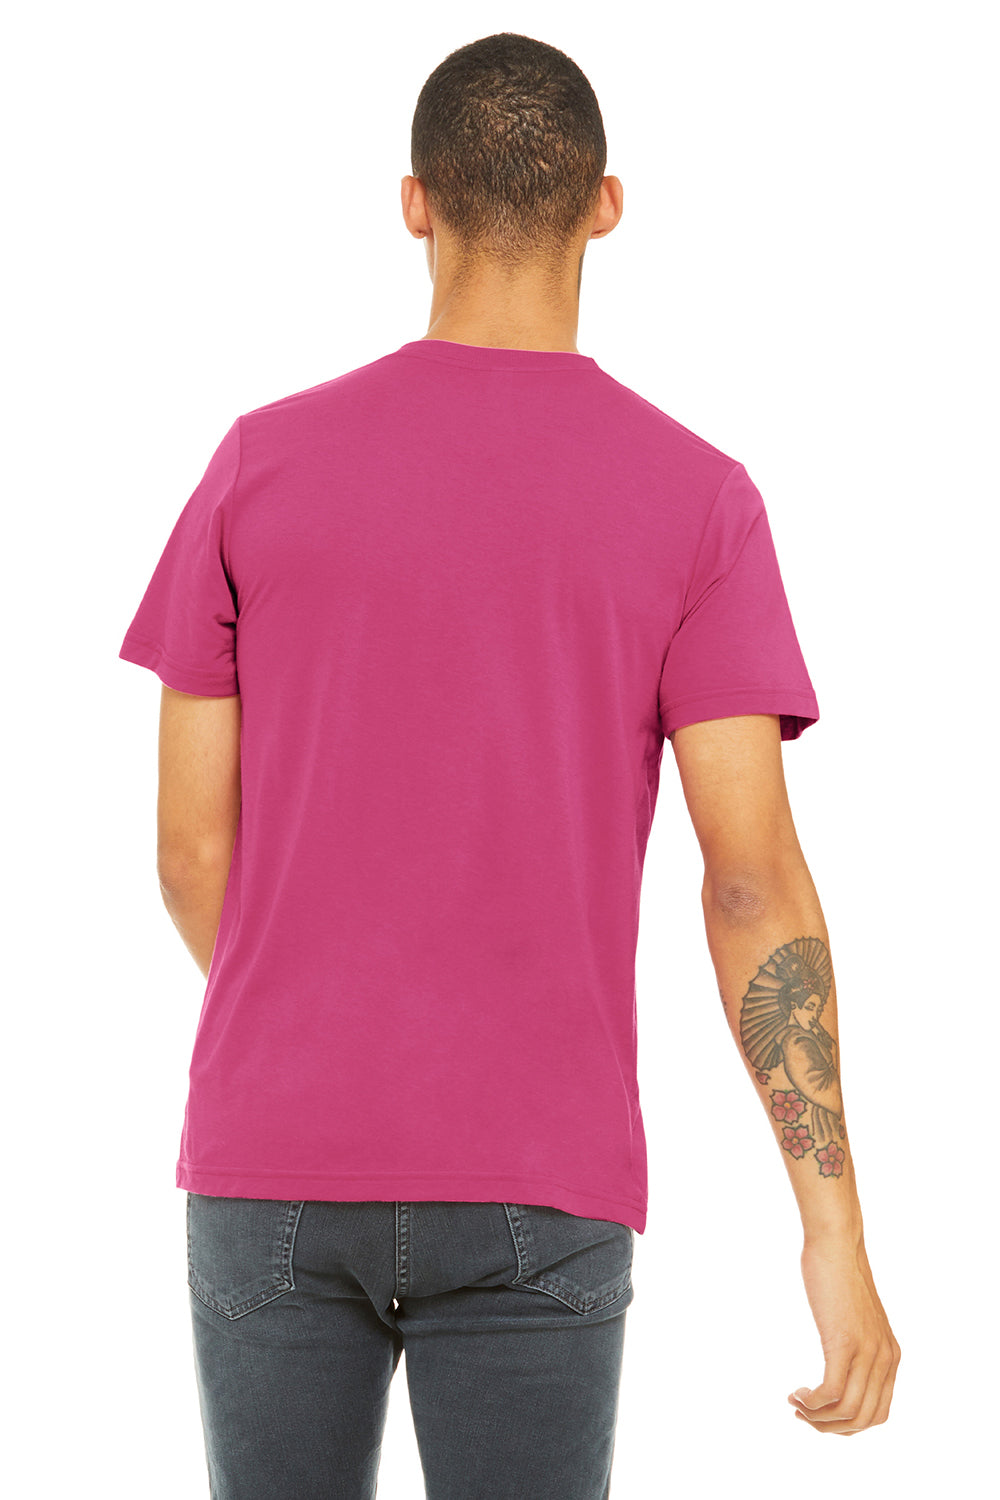 Bella + Canvas BC3650/3650 Mens Short Sleeve Crewneck T-Shirt Berry Pink Model Back